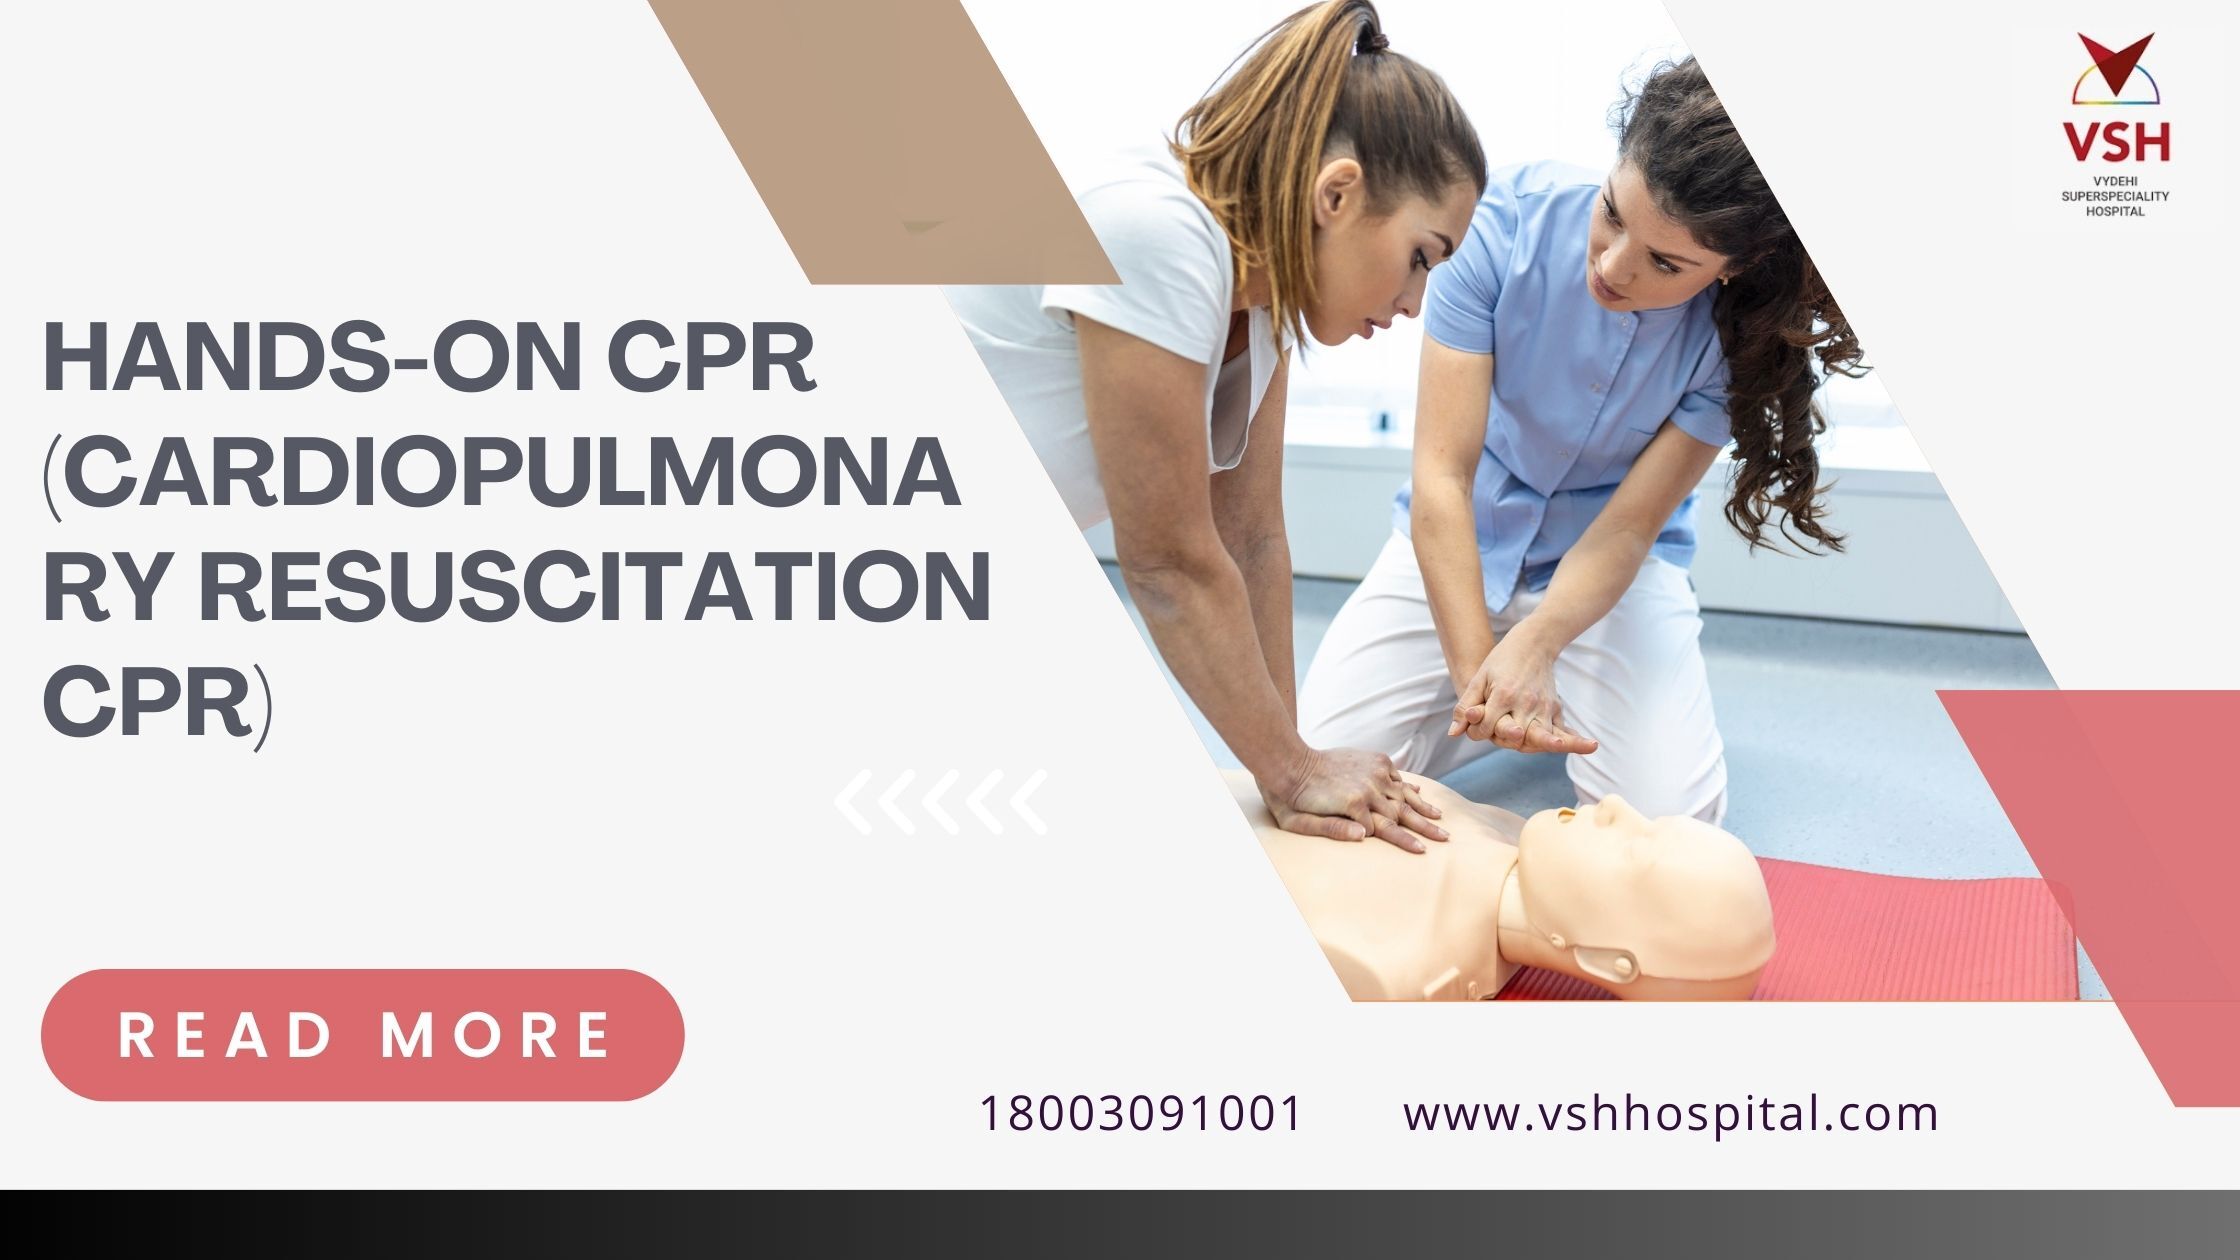 Hands-On CPR (Cardiopulmonary Resuscitation CPR)